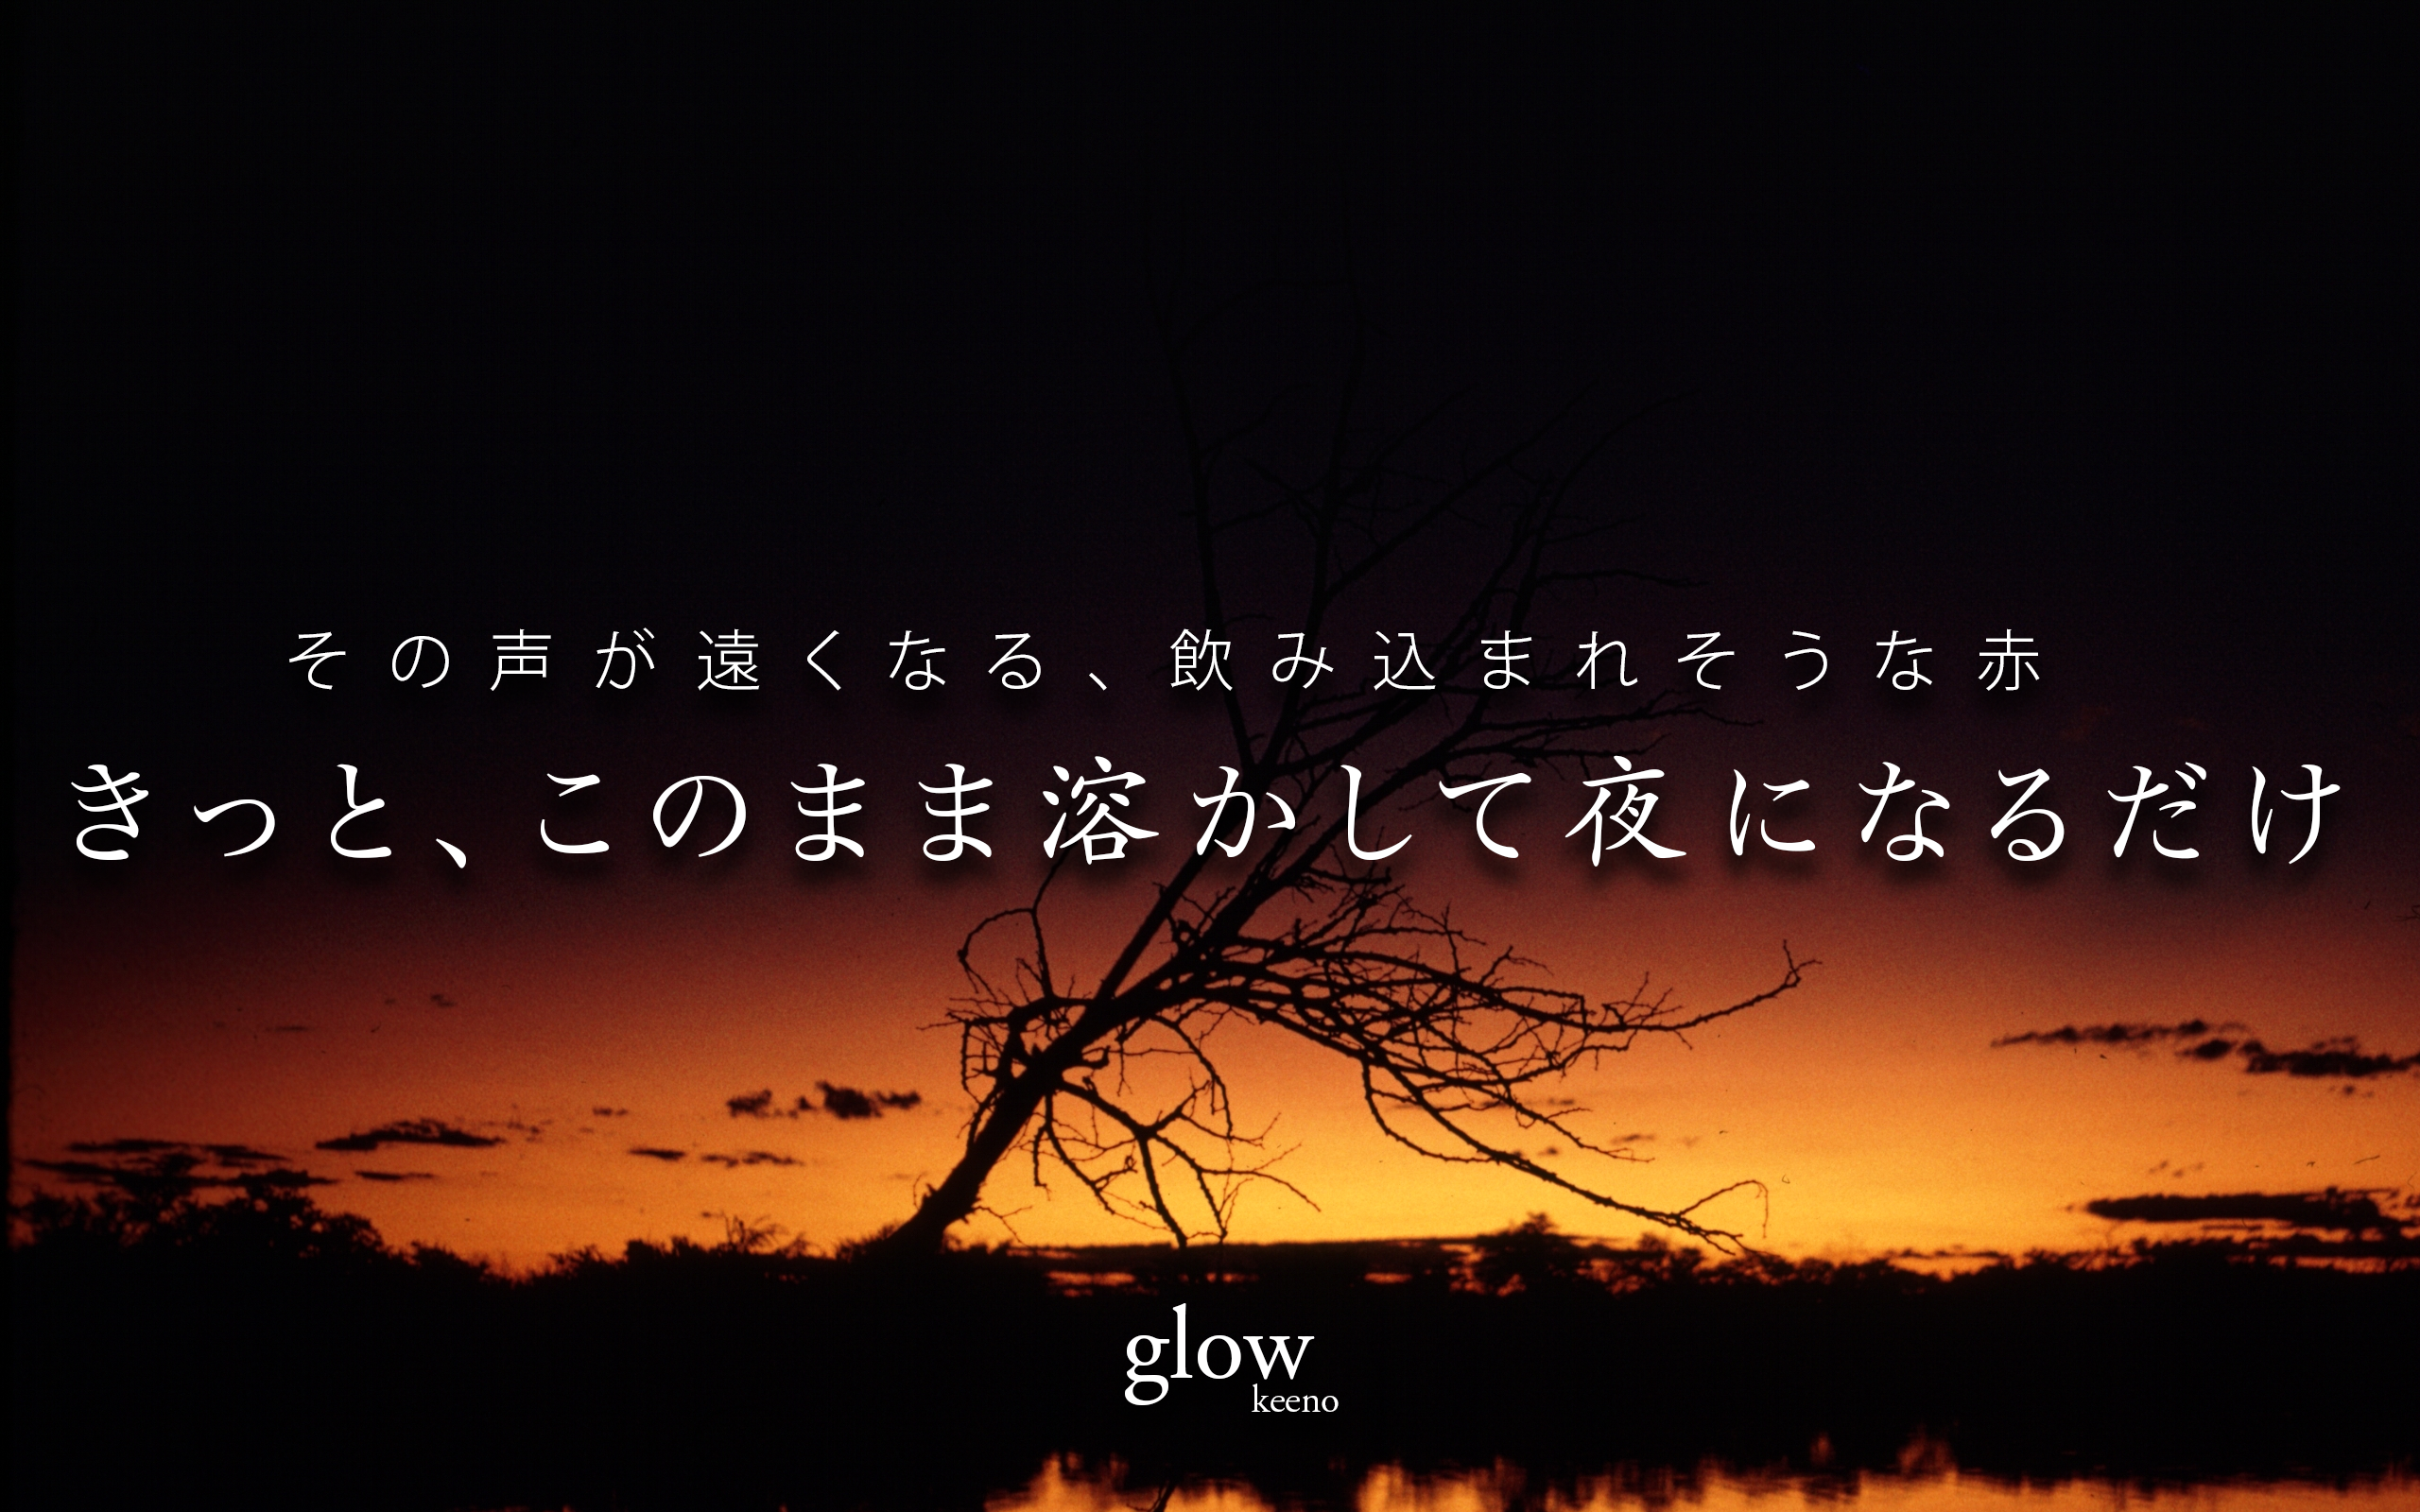 Glow (jp)